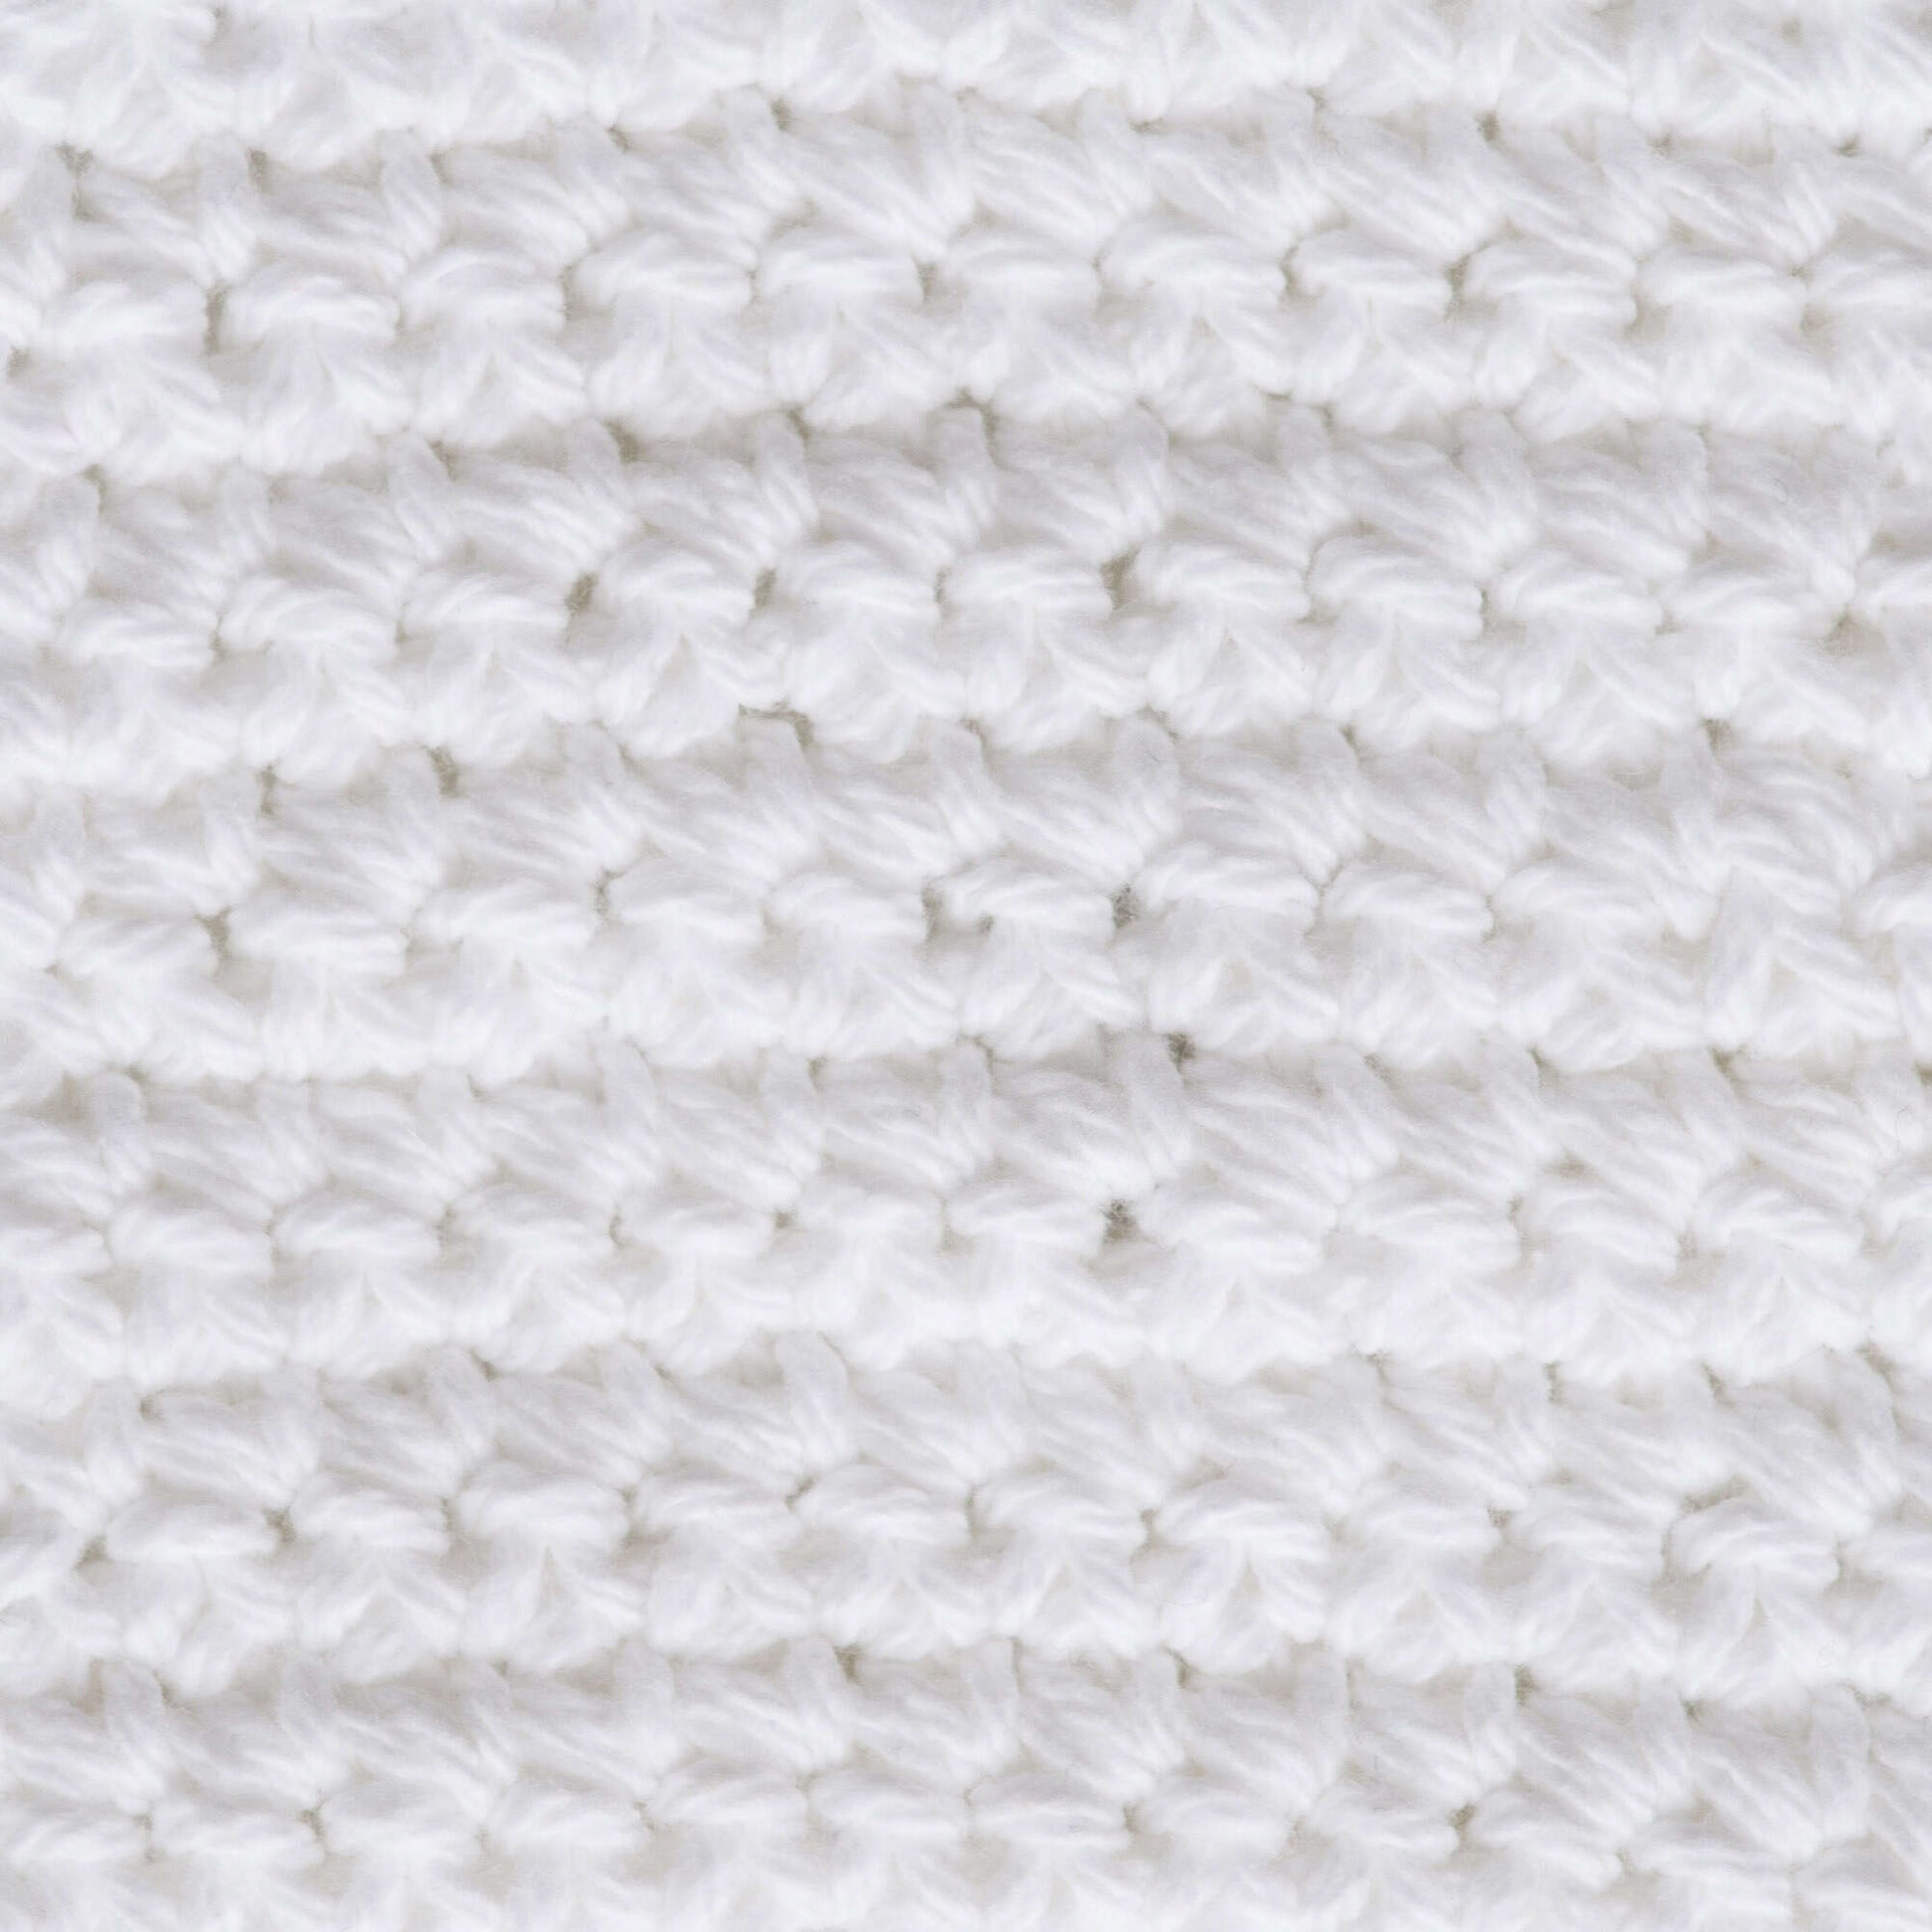 Lily Sugar'N Cream Indigo Yarn - 6 Pack of 71g/2.5oz - Cotton - 4 Medium  (Worsted) - 120 Yards - Knitting/Crochet